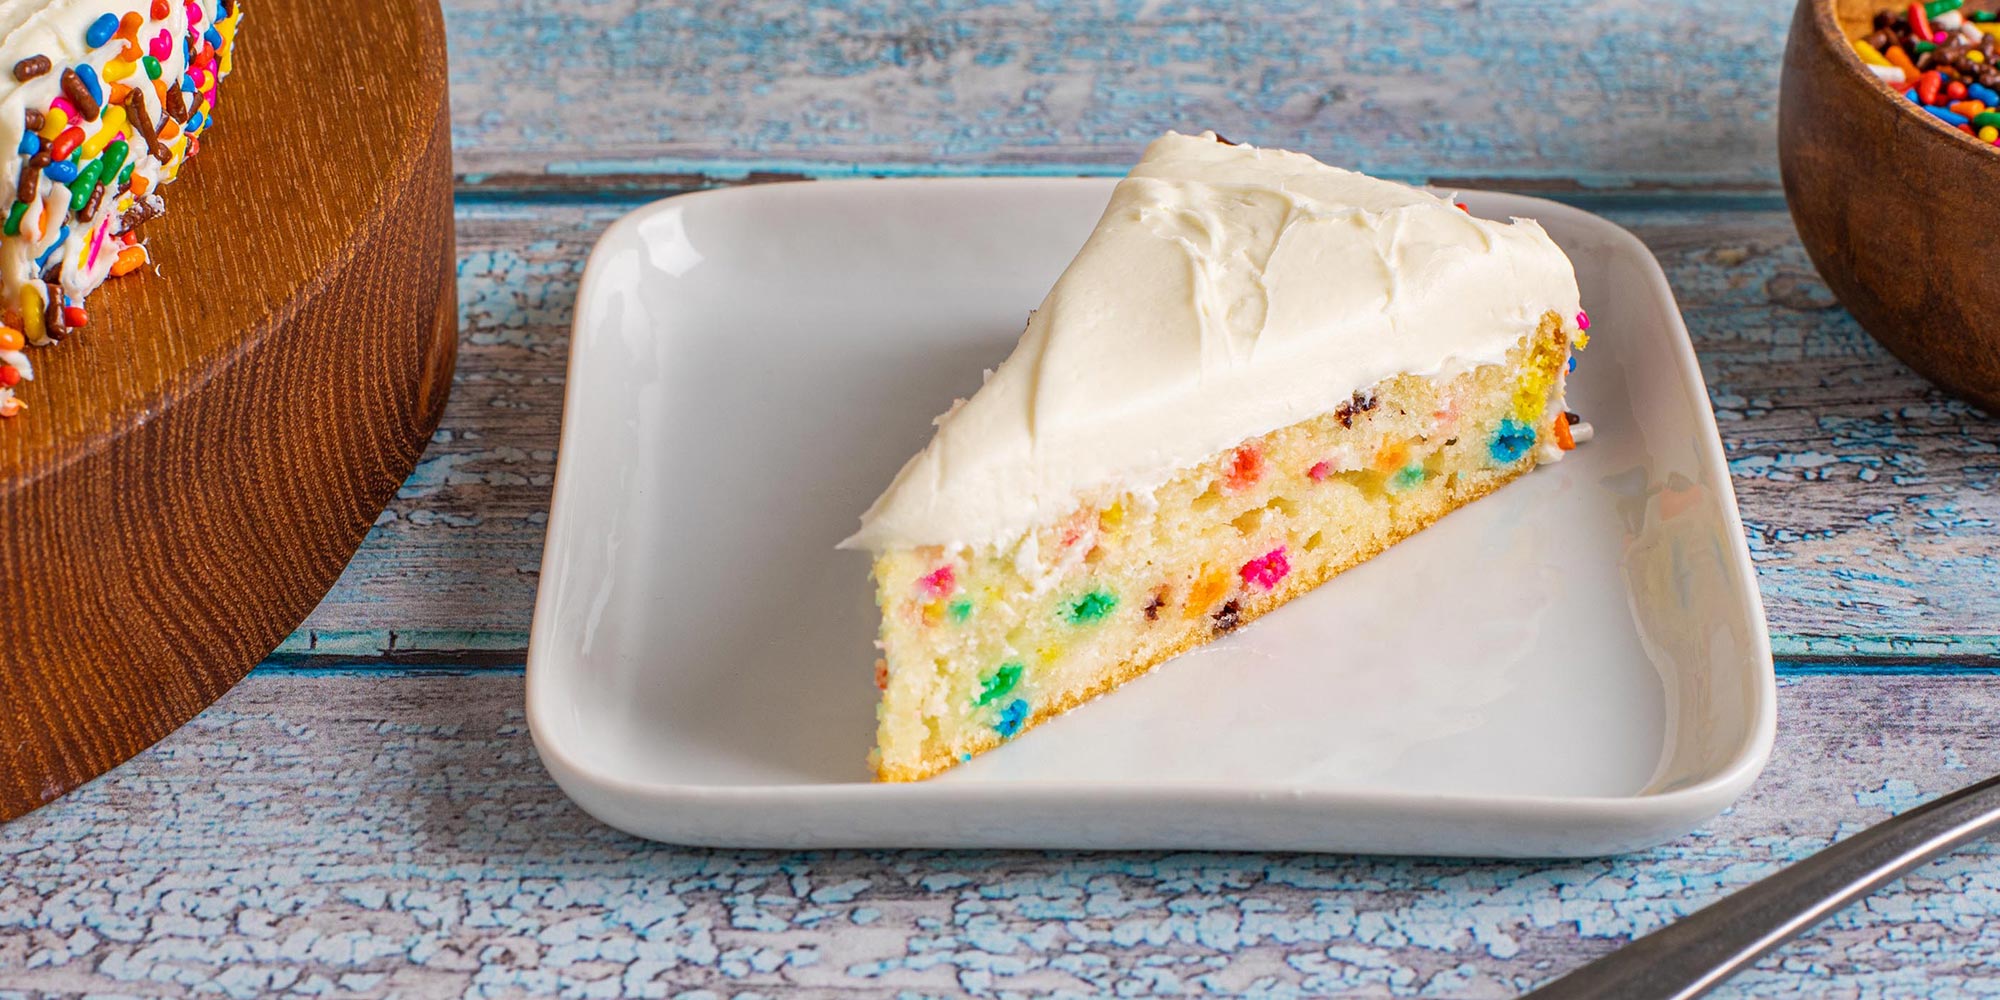 Pineapple flavor birthday cake recipe | Birthday cake | soft spongy cake  recipe | Cake recipe - YouTube